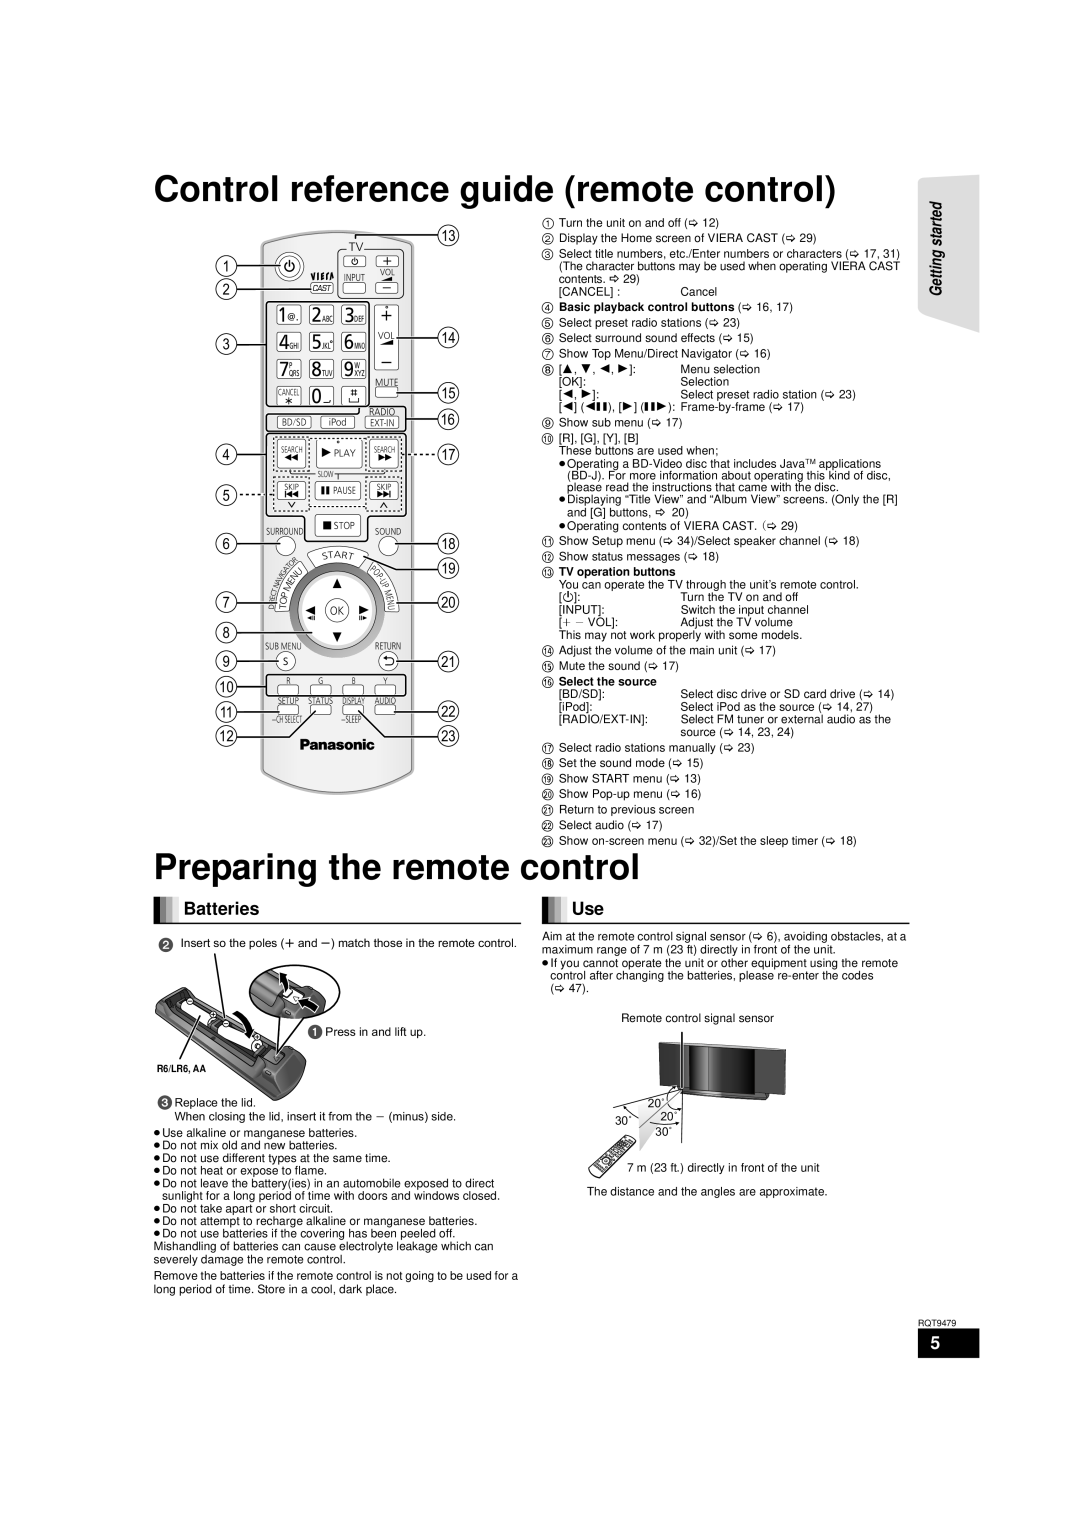 Panasonic SC-BTX70, SA-BTX70 warranty Control reference guide remote control, Preparing the remote control, Batteries 